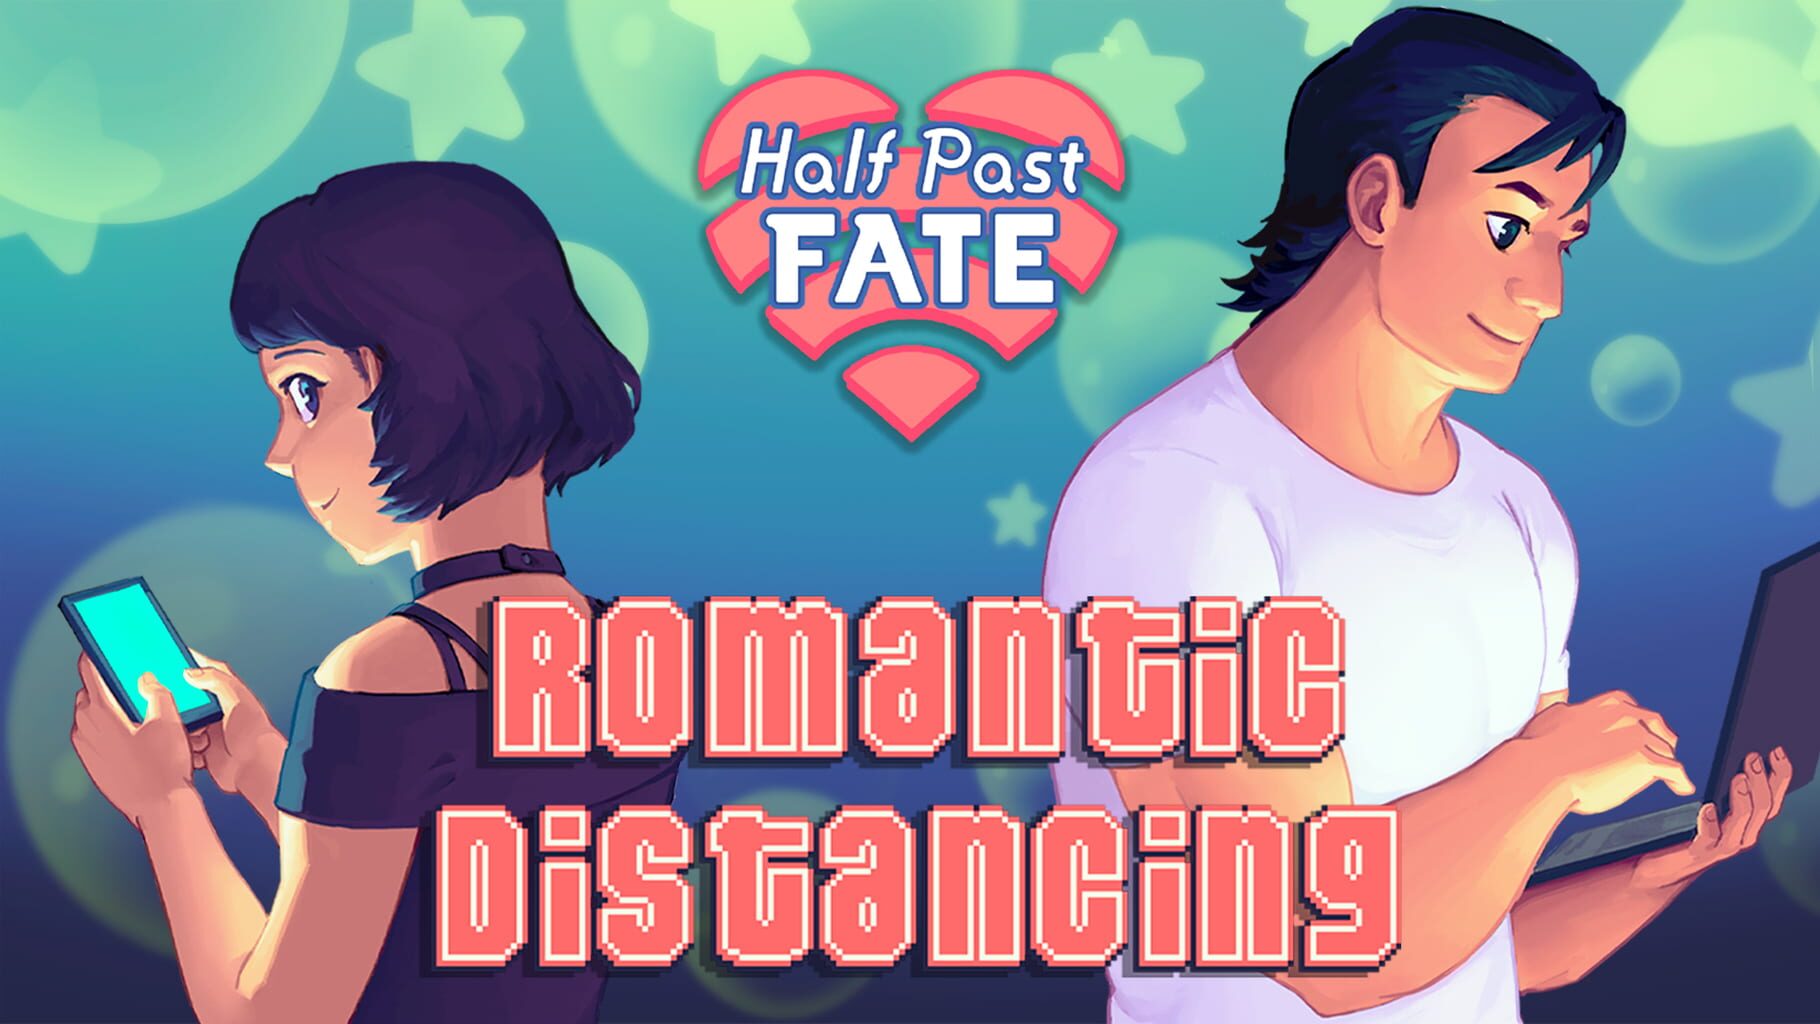 Half Past Fate: Romantic Distancing artwork